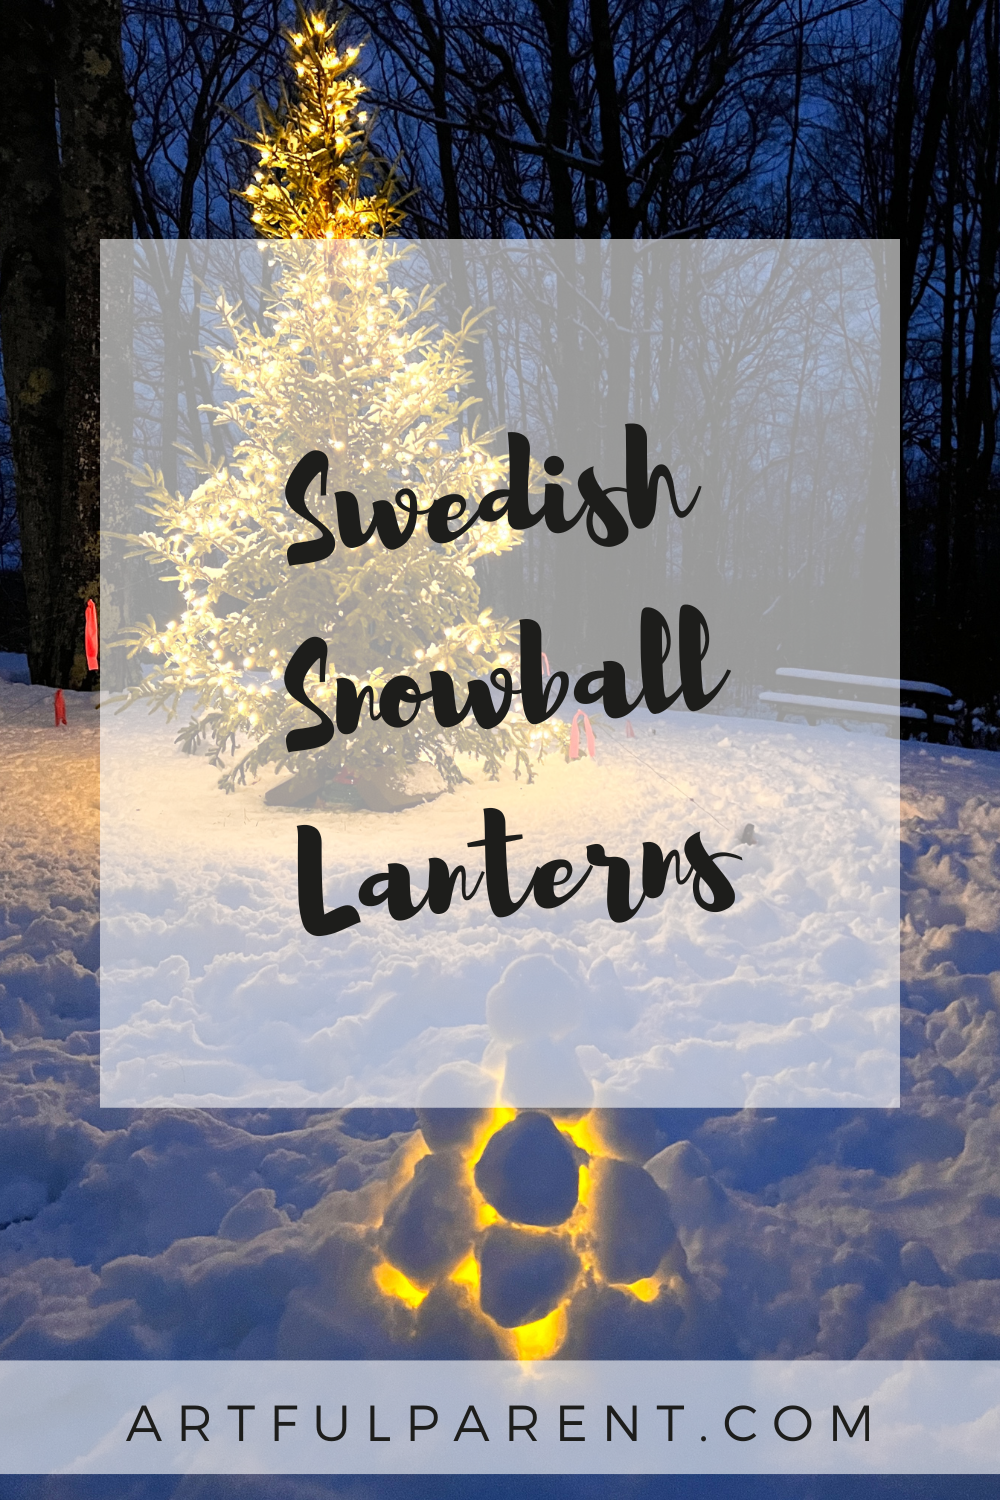 How to Make Swedish Snow Lanterns